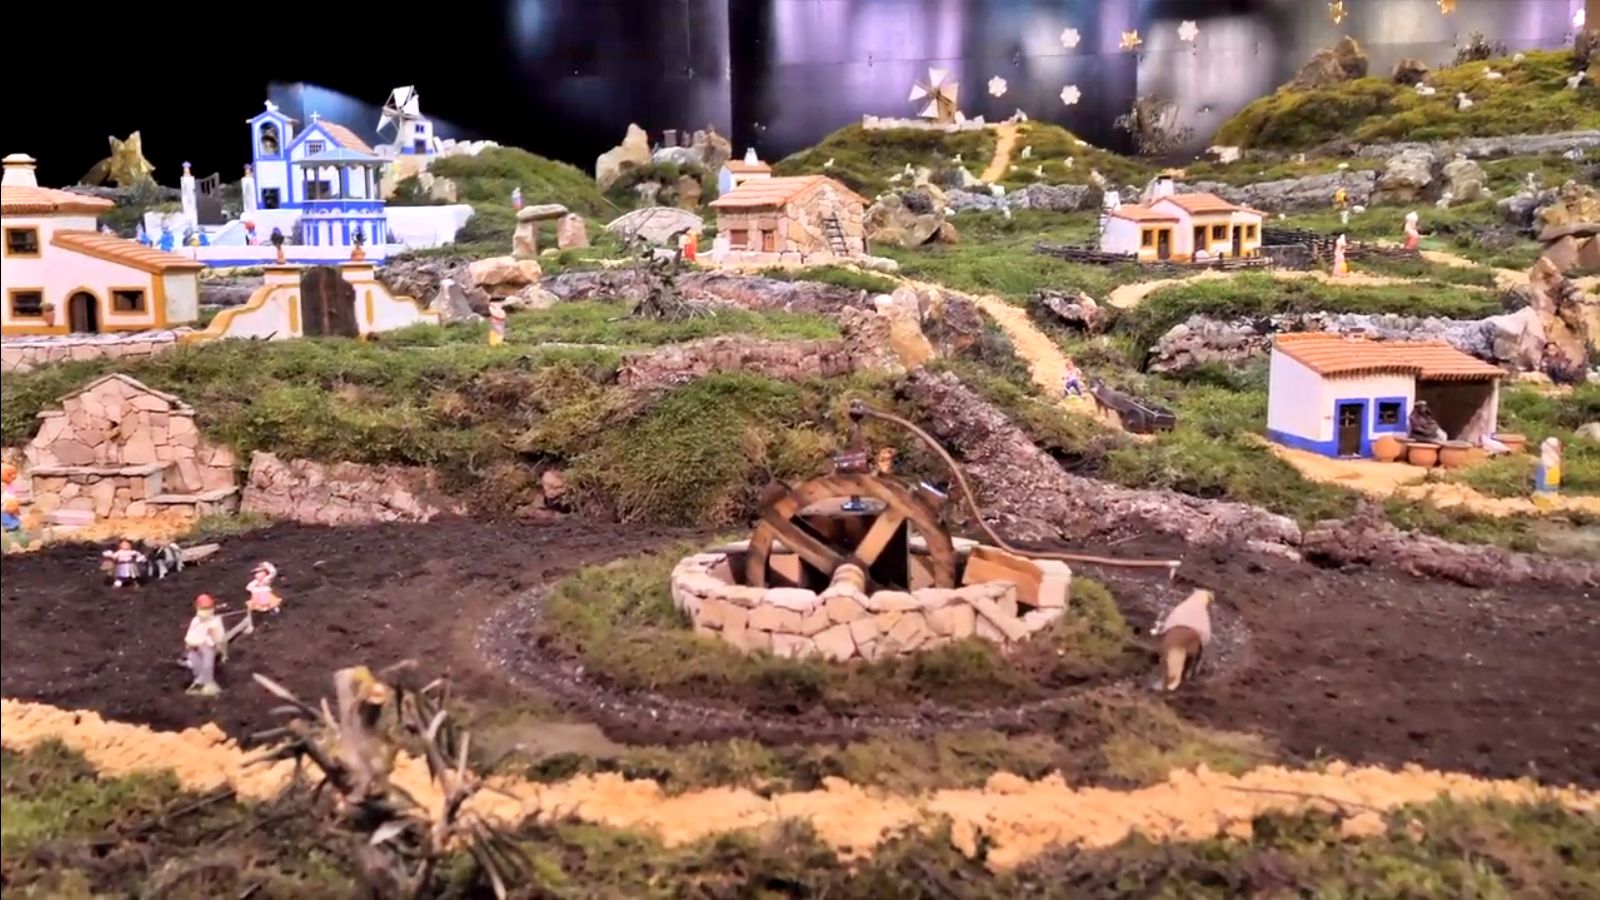 Miniature village